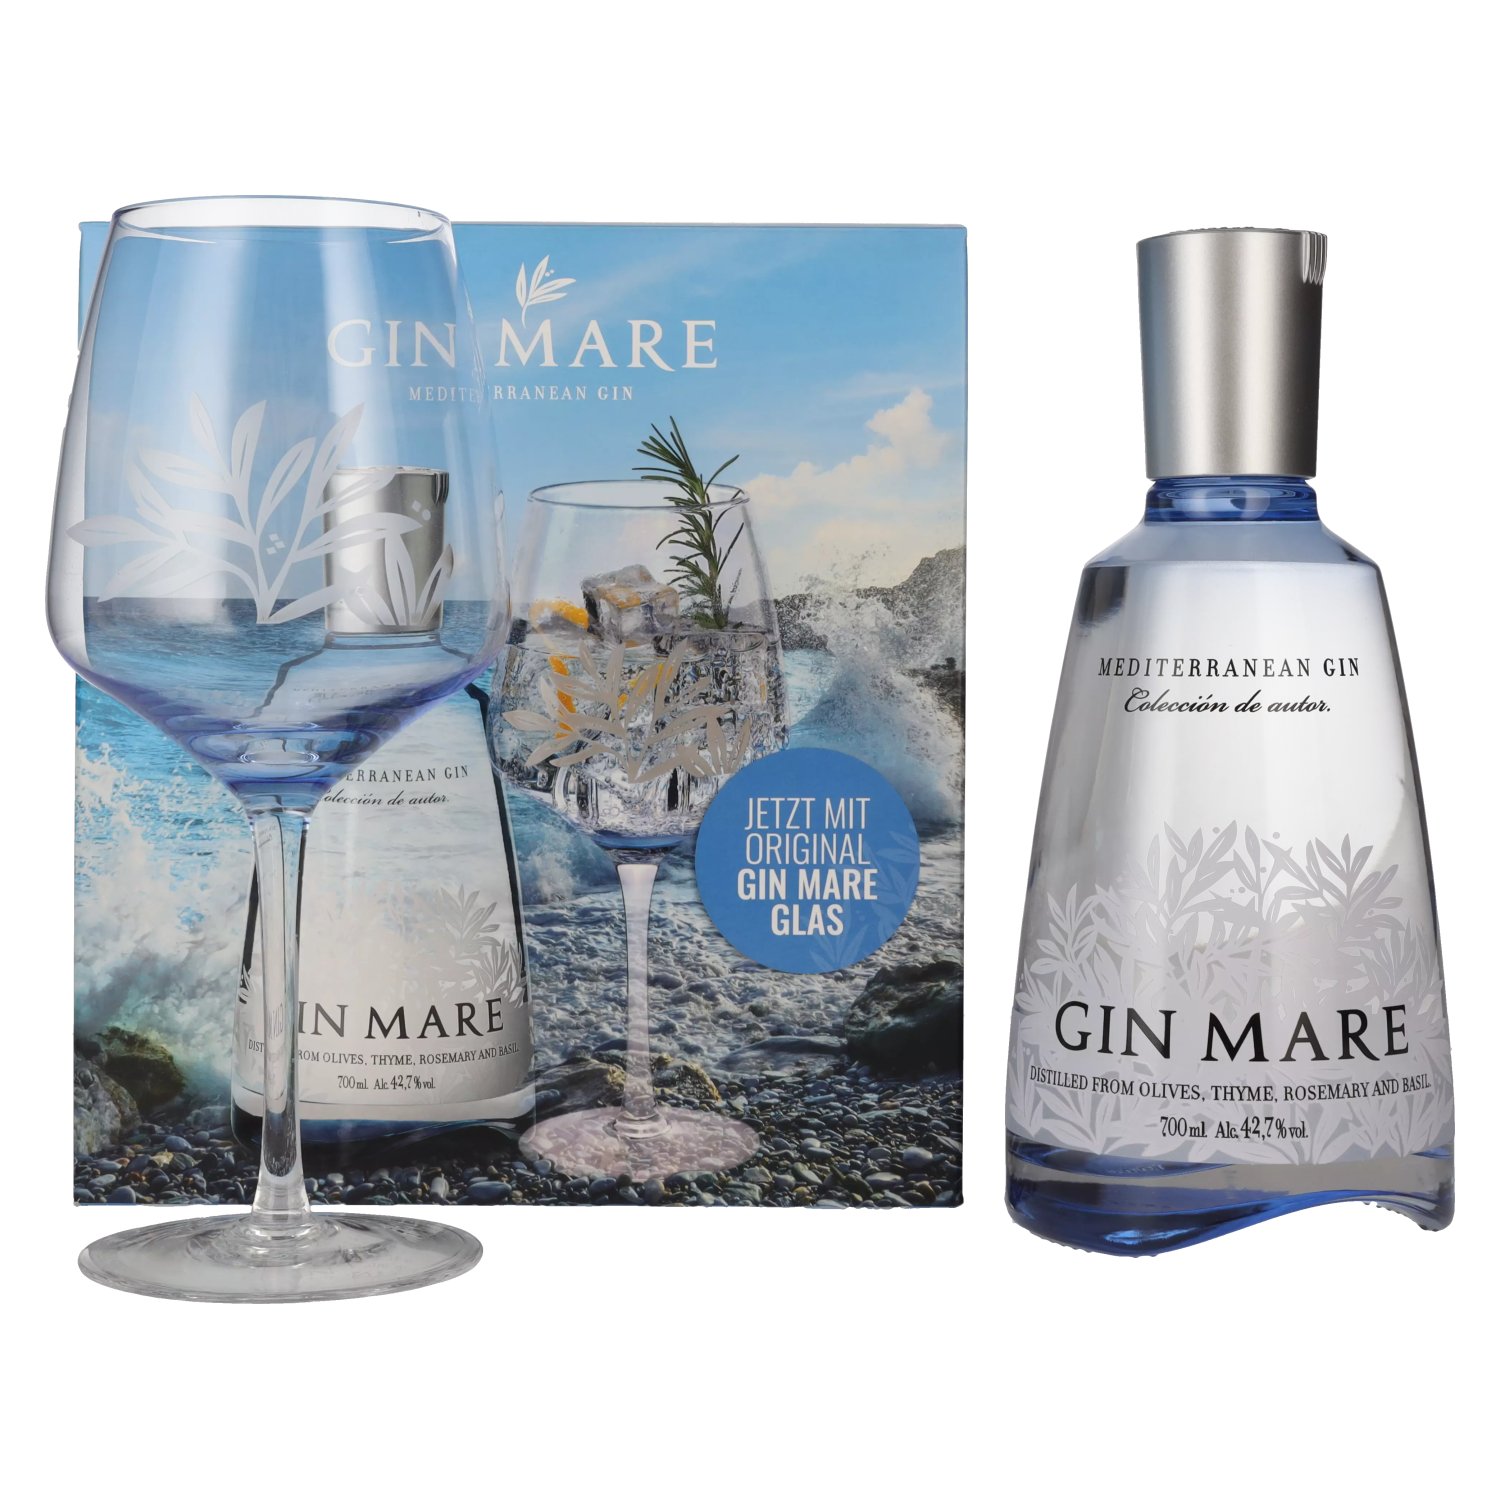 Gin Mare Mediterranean Gin 0,7l with 42,7% Vol. glass in Giftbox